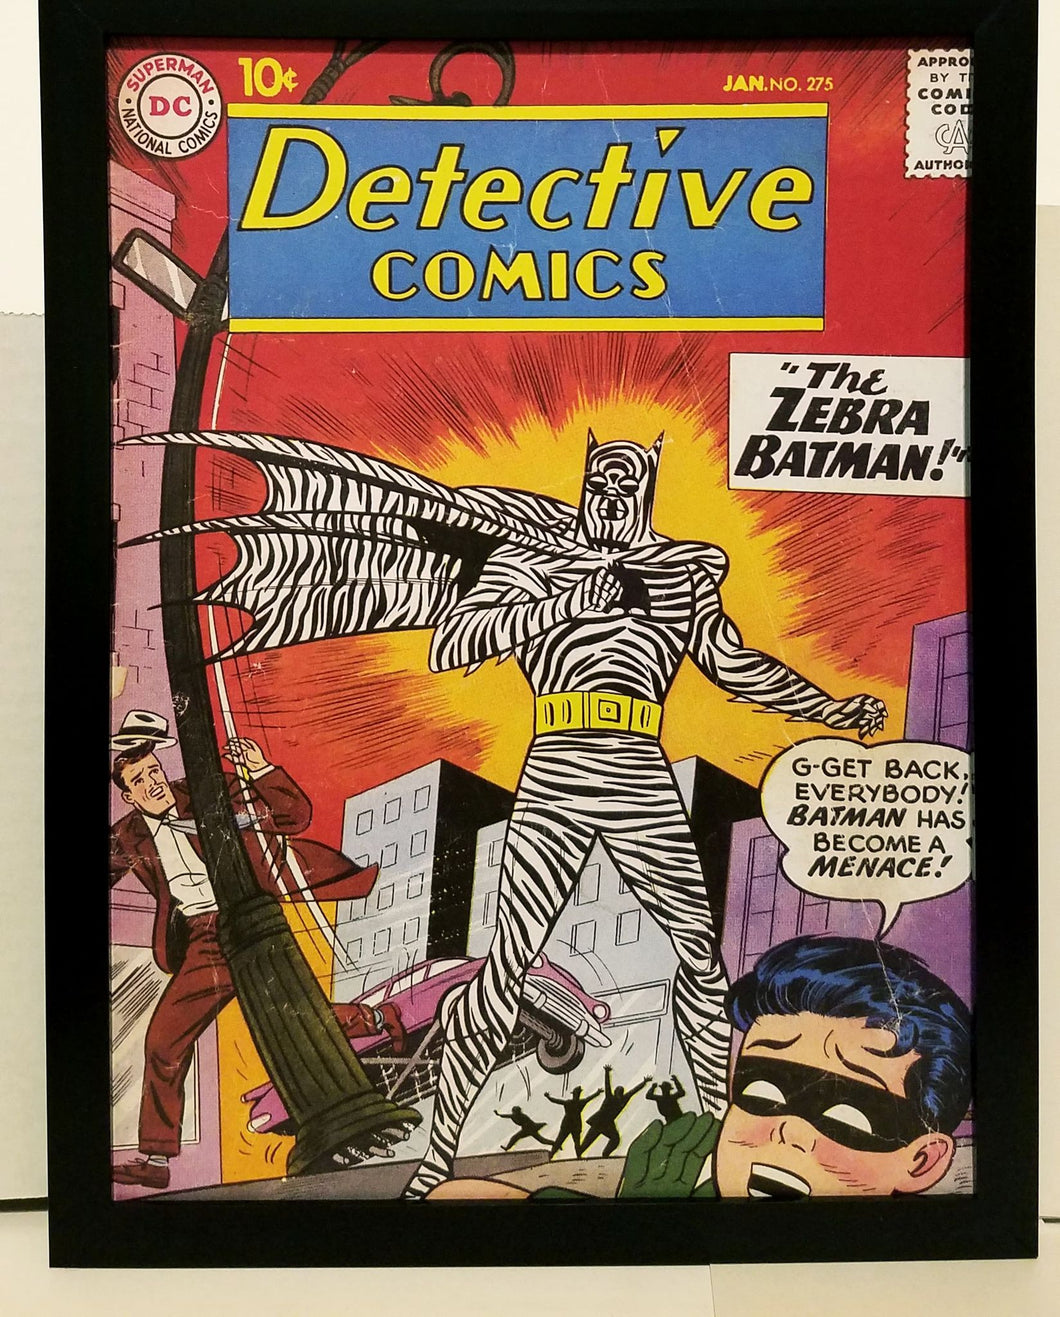 Detective Comics #275 Batman 9x12 FRAMED Vintage 1960 DC Art Print Poster